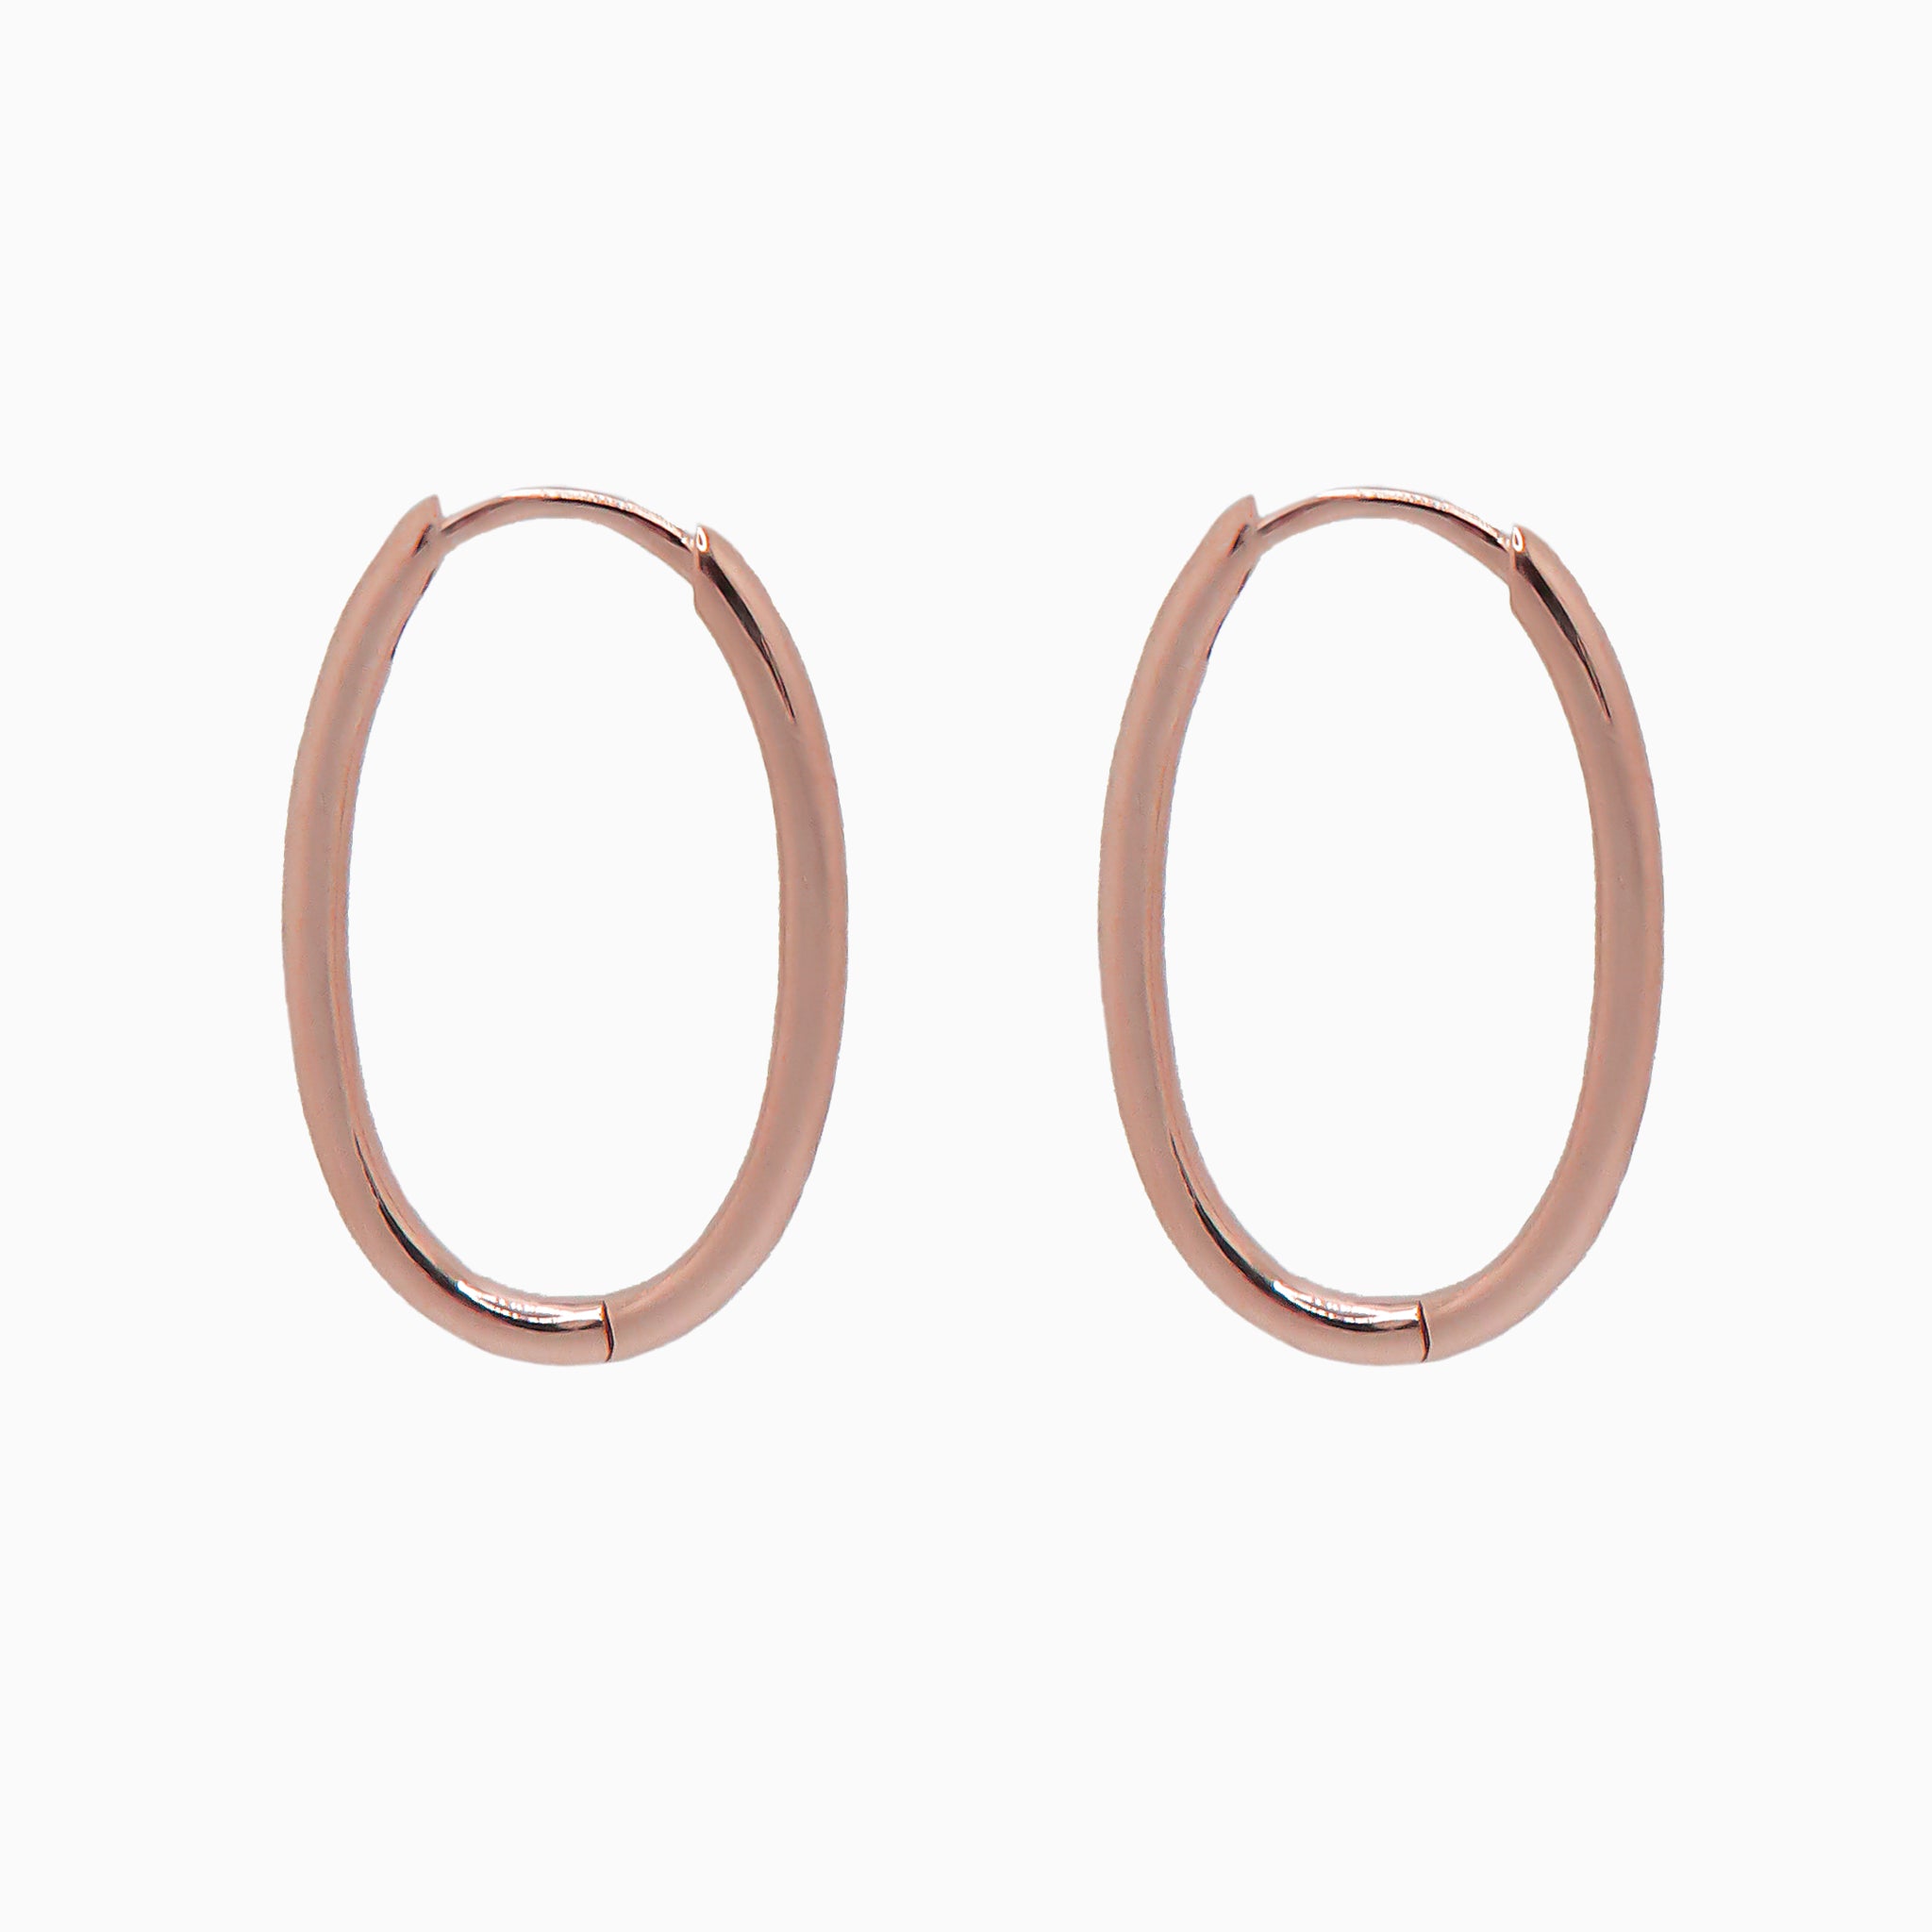 14k Rose Gold 21mm x 14mm Hinged Everyday Oval Hoop Earrings, Side View